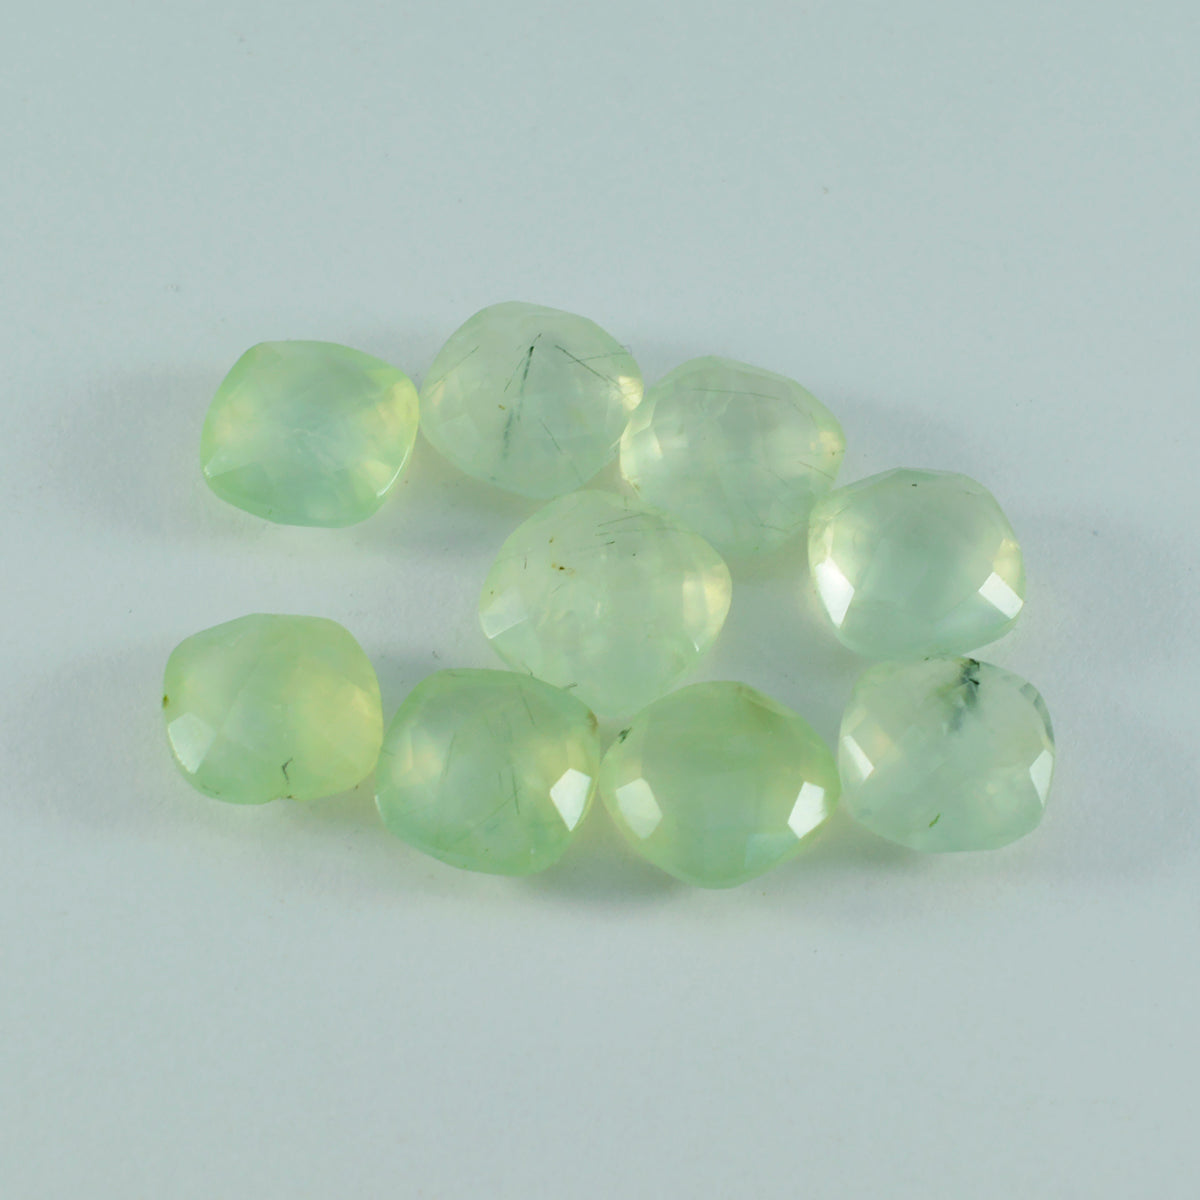 Riyogems 1PC Green Prehnite Faceted 4x4 mm Cushion Shape AAA Quality Loose Gemstone